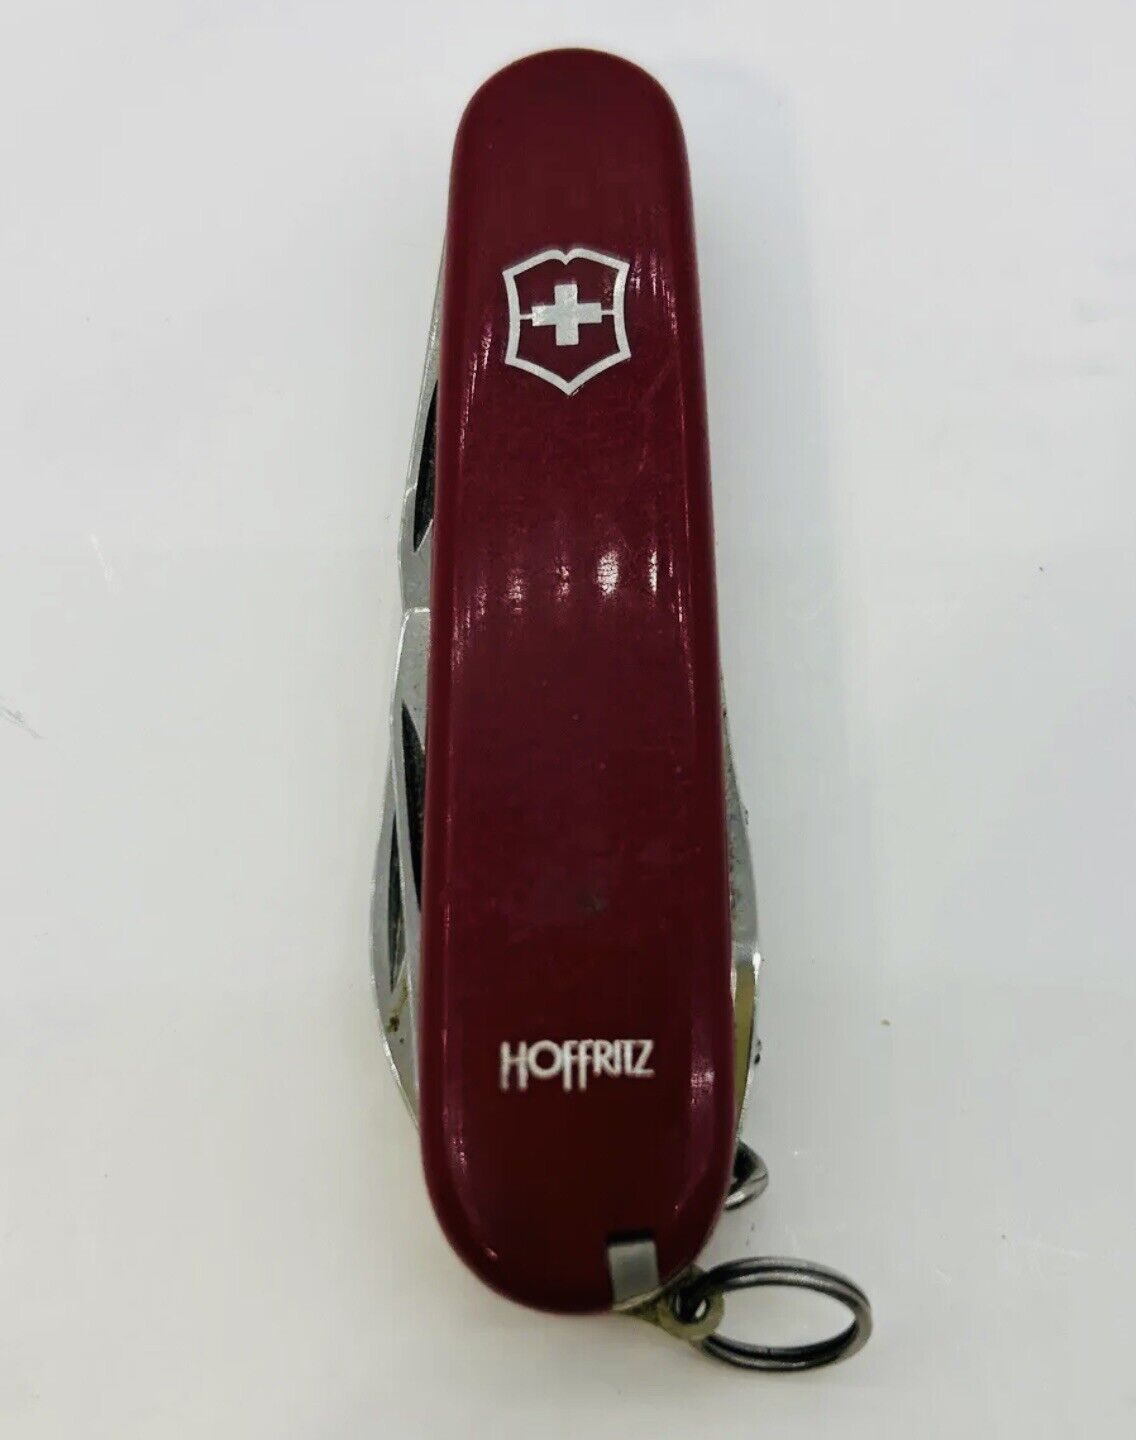 Vintage Victoria Swiss Army Pocket Knife Hoffritz